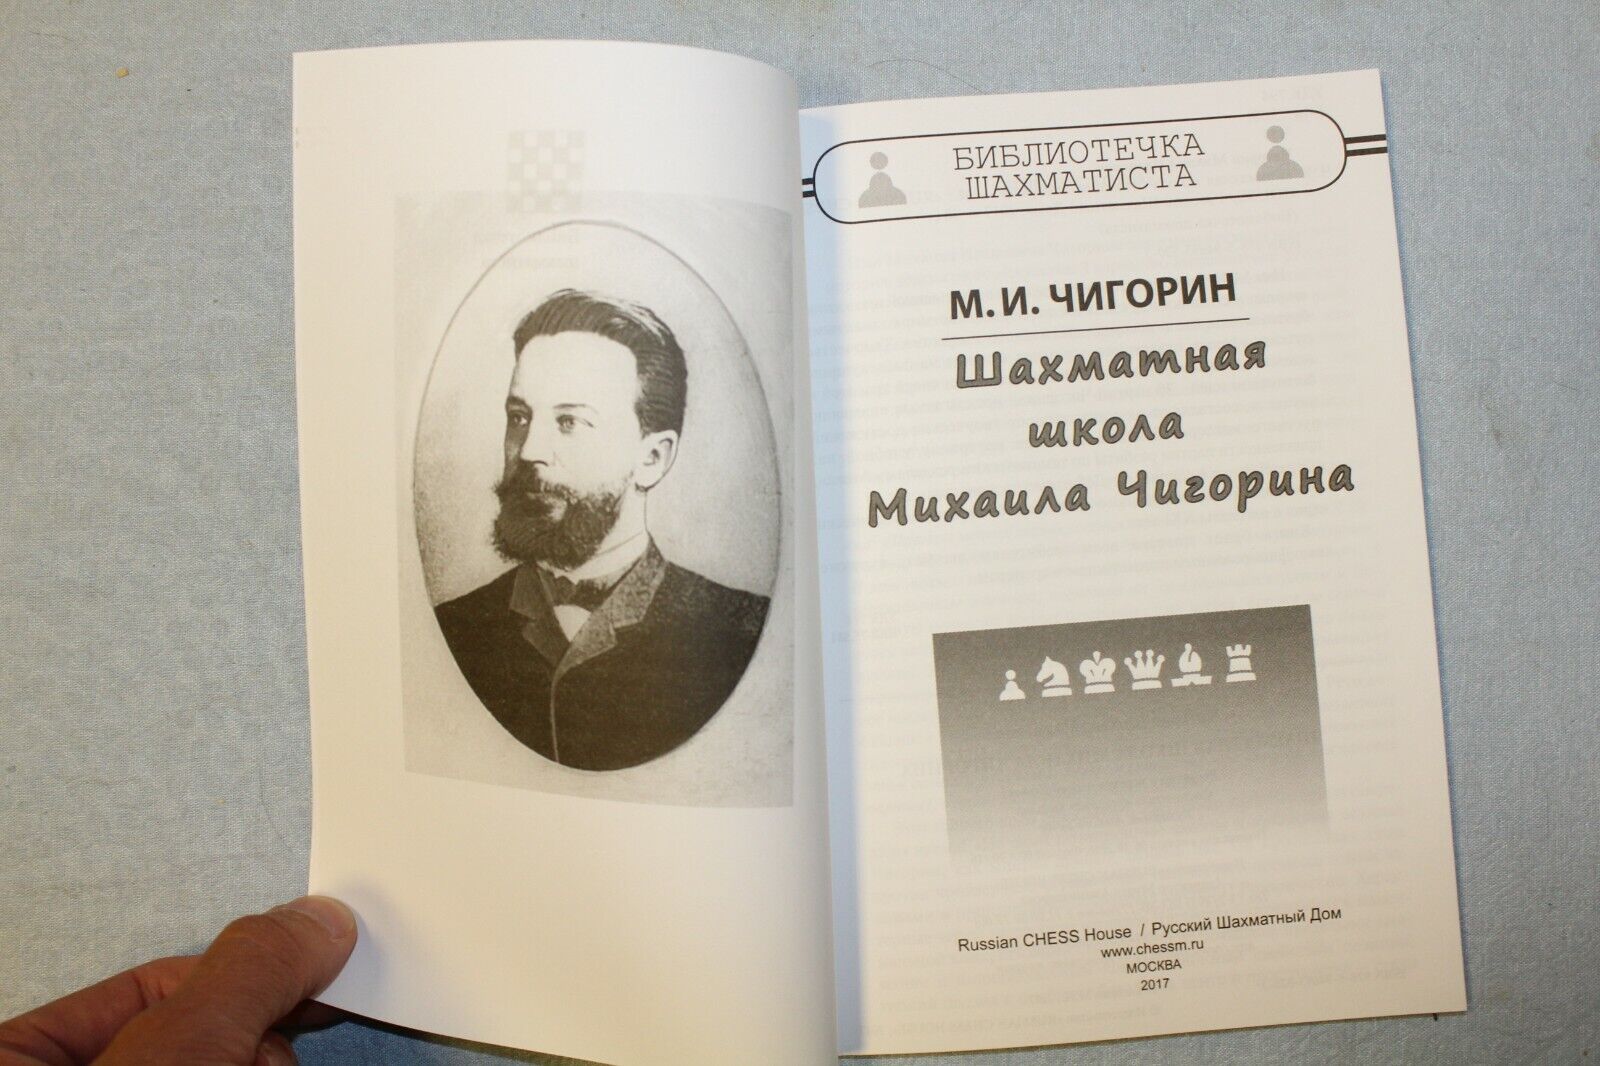 Alekhine V. Capablanca. Alekhine (alexander) Autograph